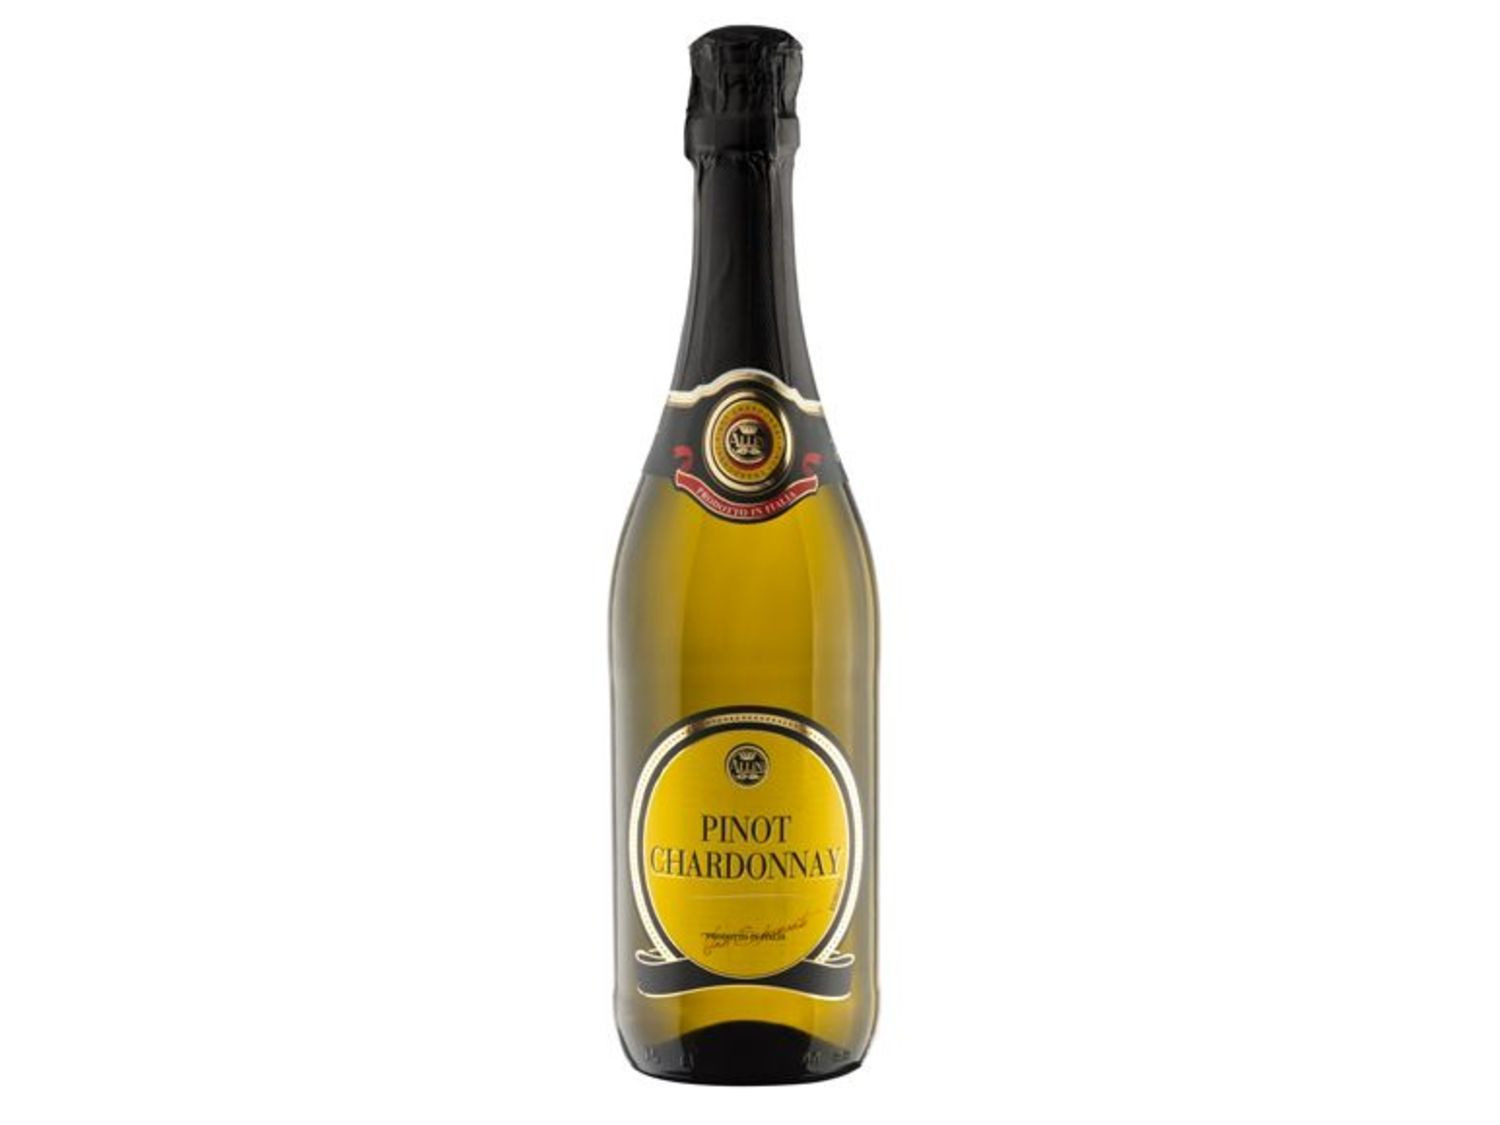 ALLINI Pinot Chardonnay LIDL brut, | 2021 Schaumwein